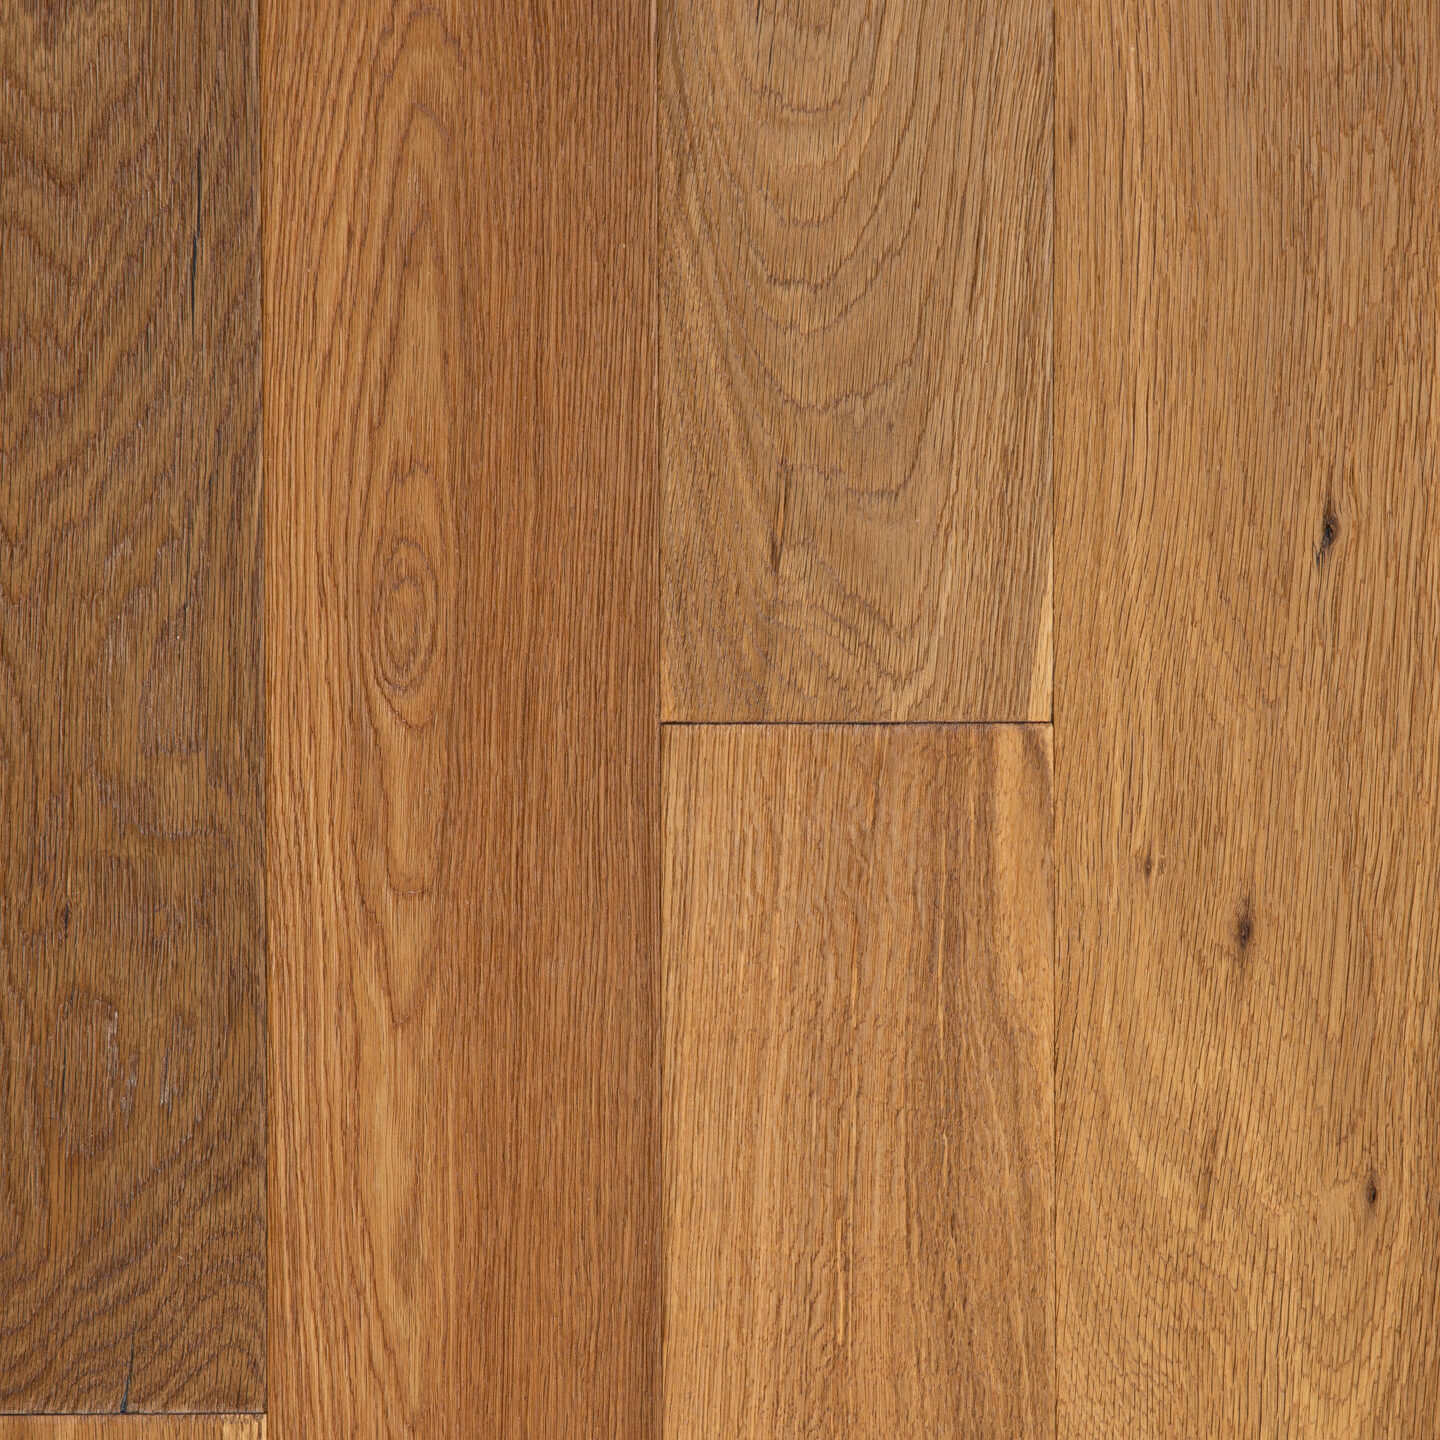 Wood Parquet Flooring - Sand-Oak